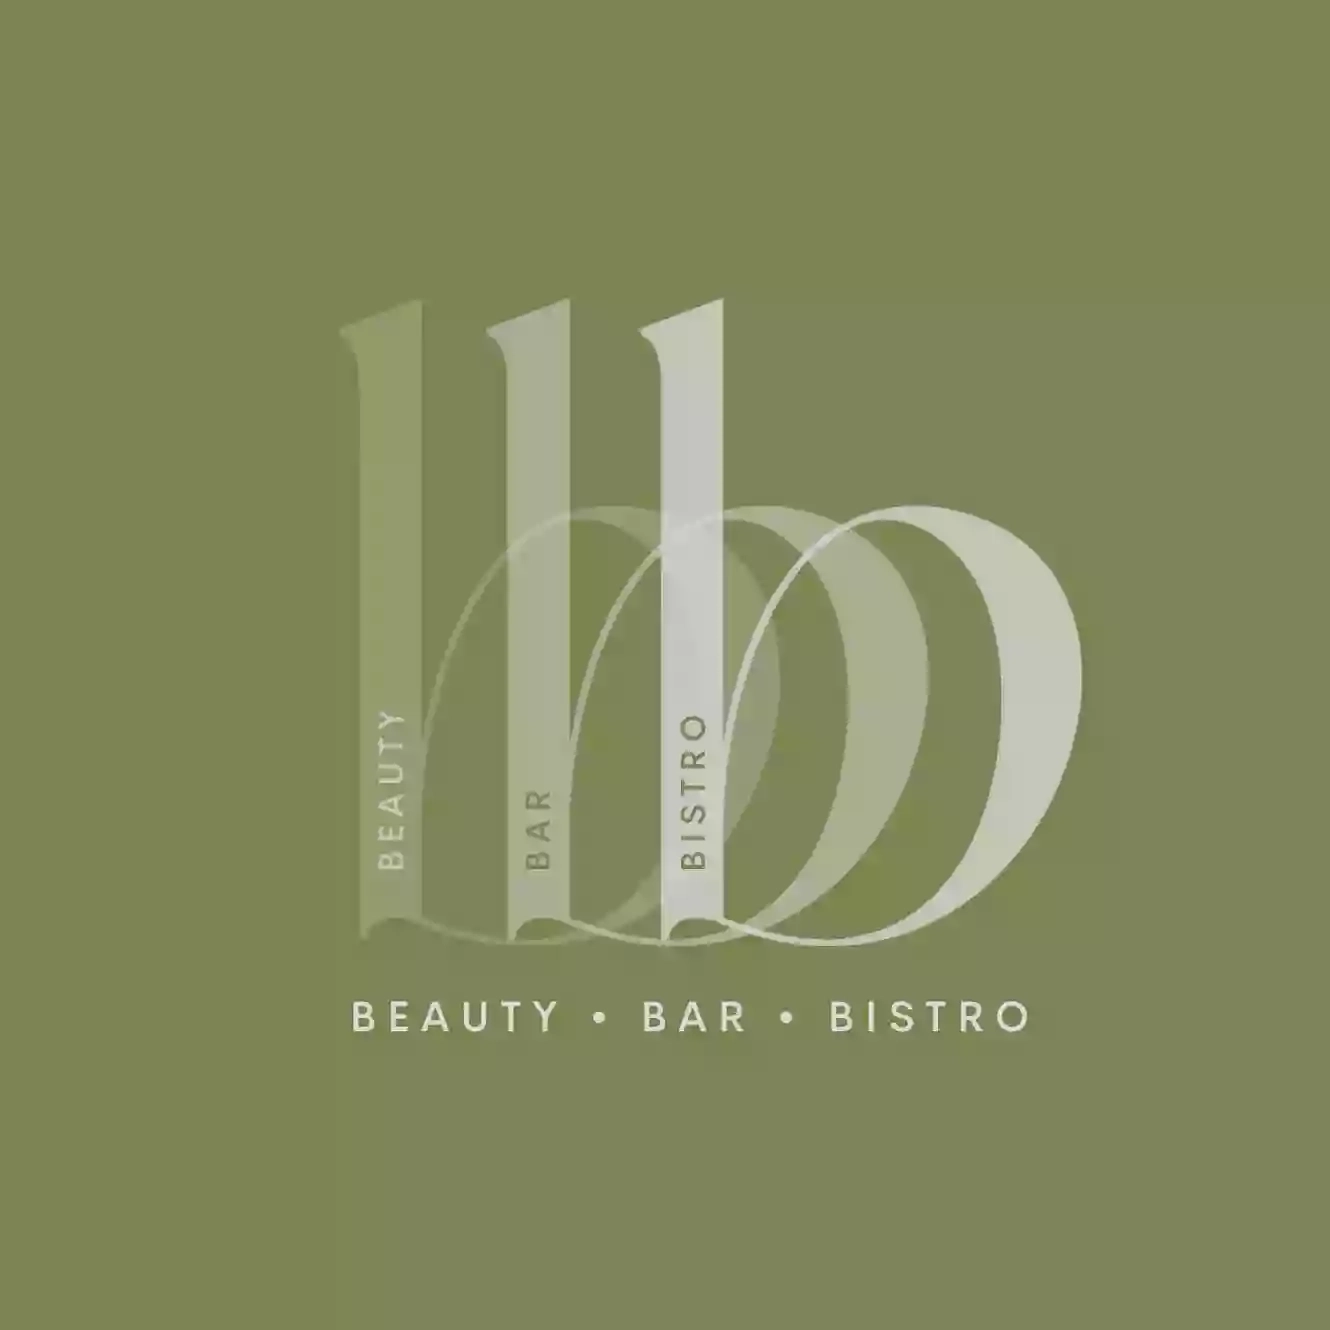 Beauty • Bar • Bistro